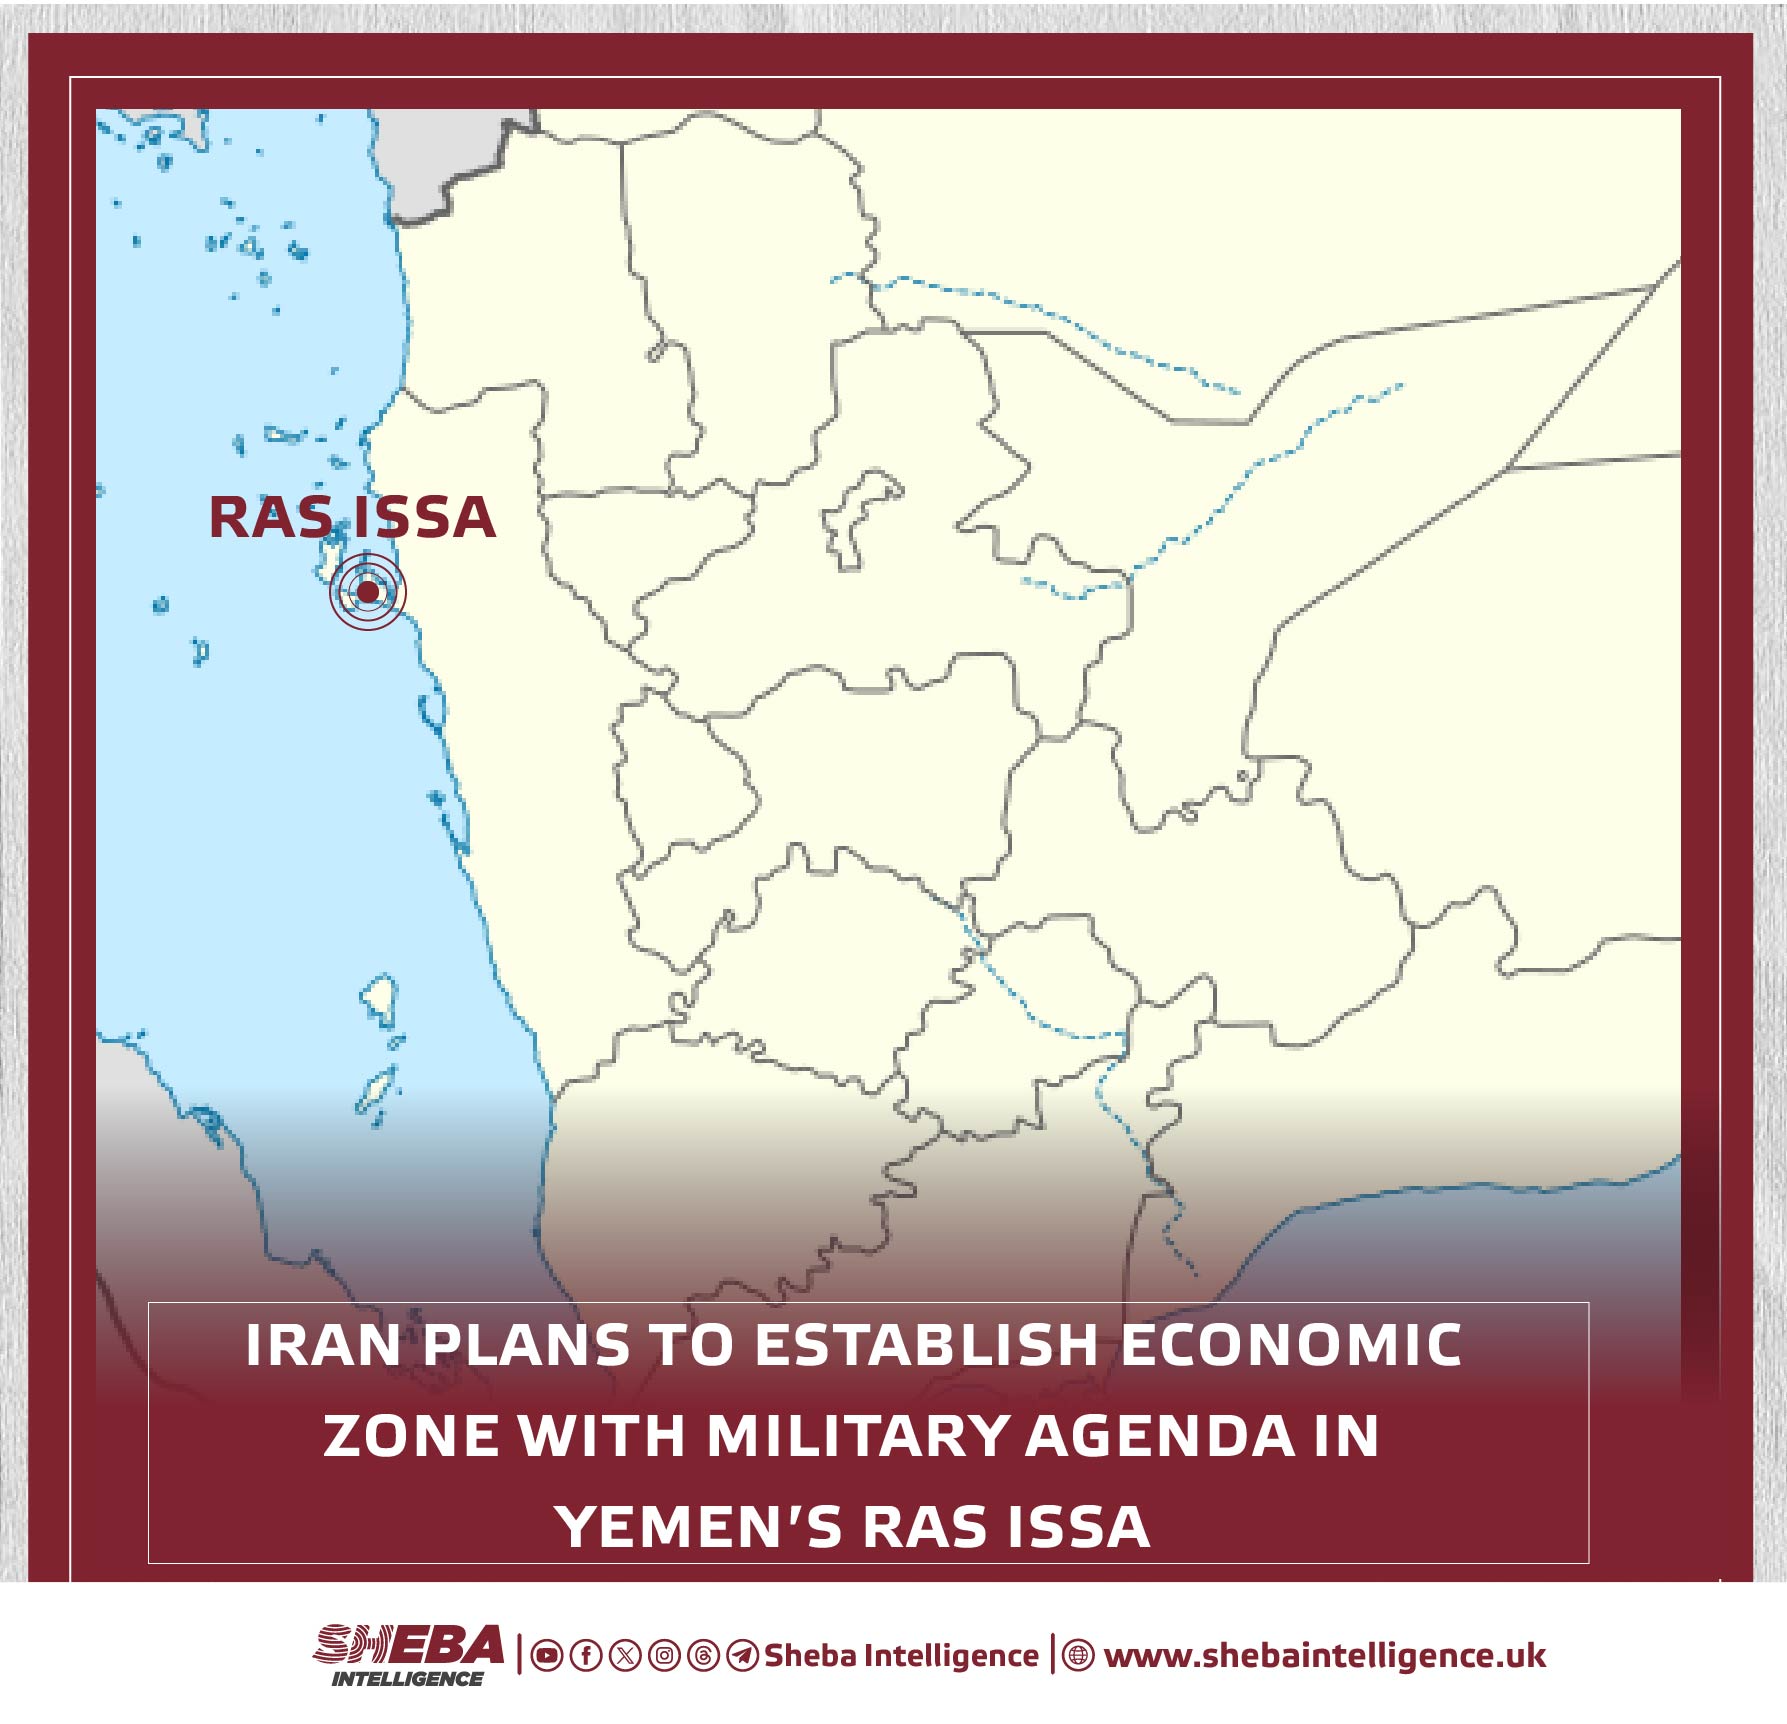 Iran Plans to Establish Economic Zone With Military Agenda in Yemen's Ras Issa